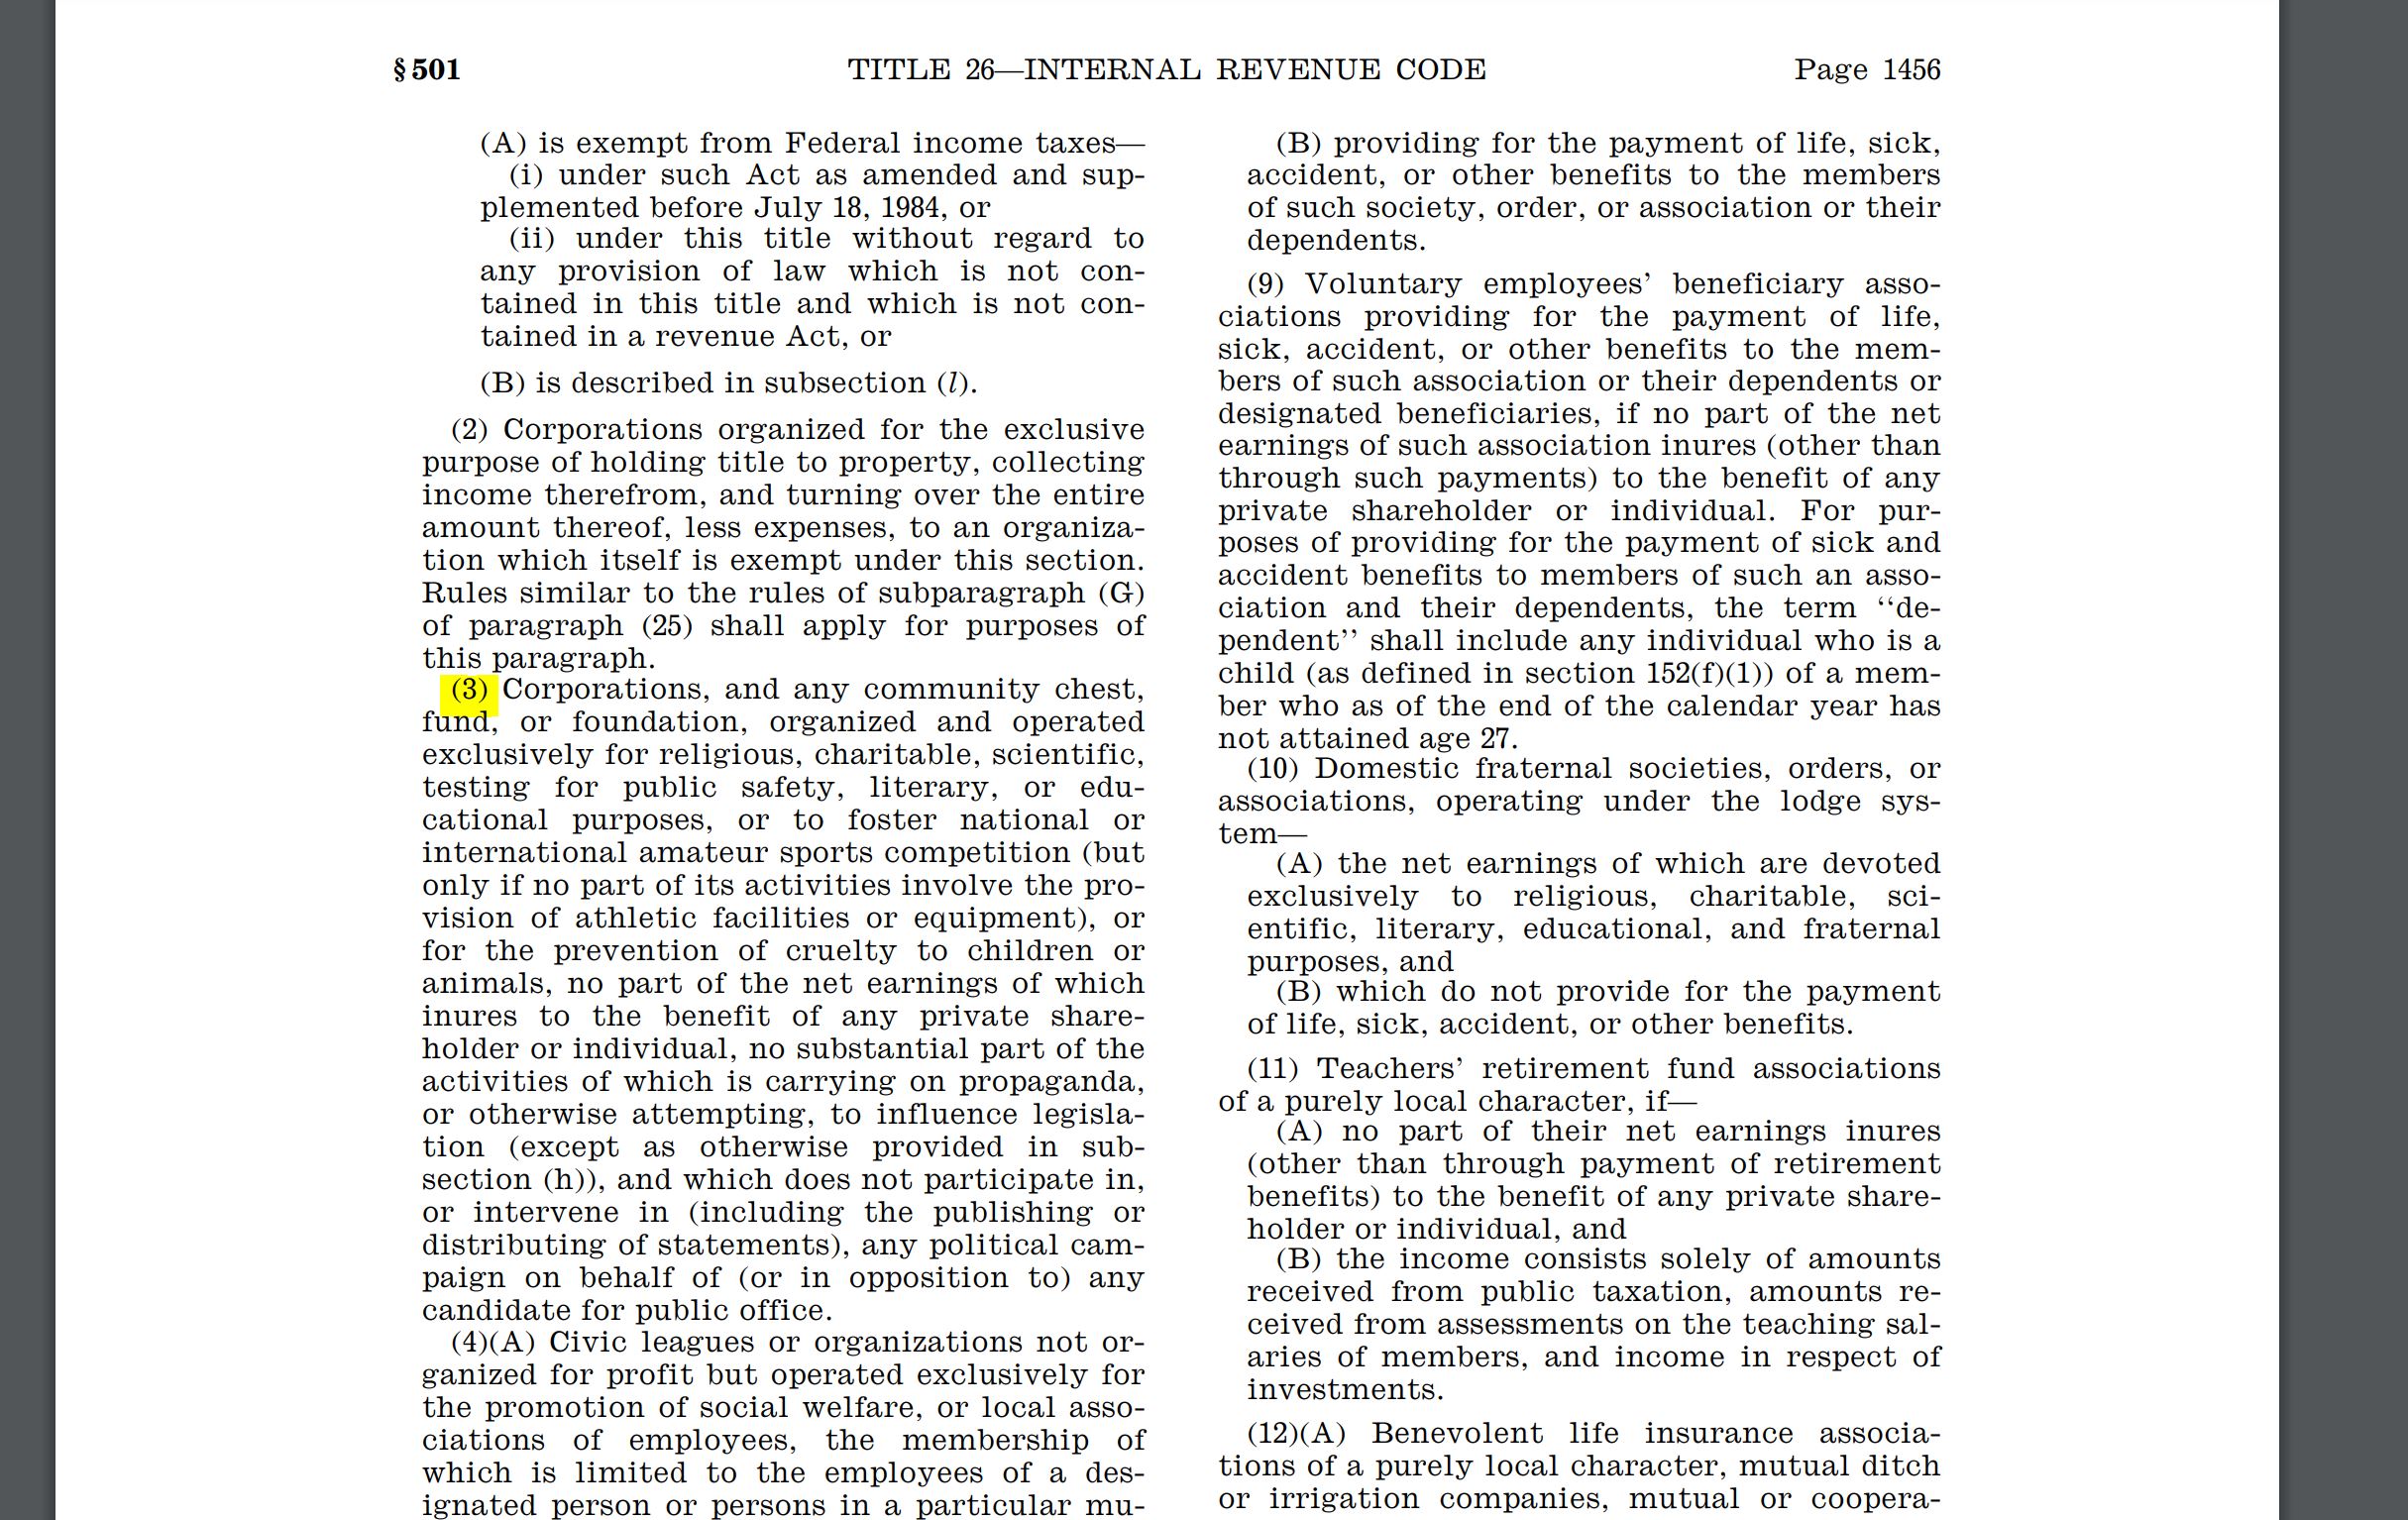 Screenshot of 501(c)(3) of Internal Revenue Code